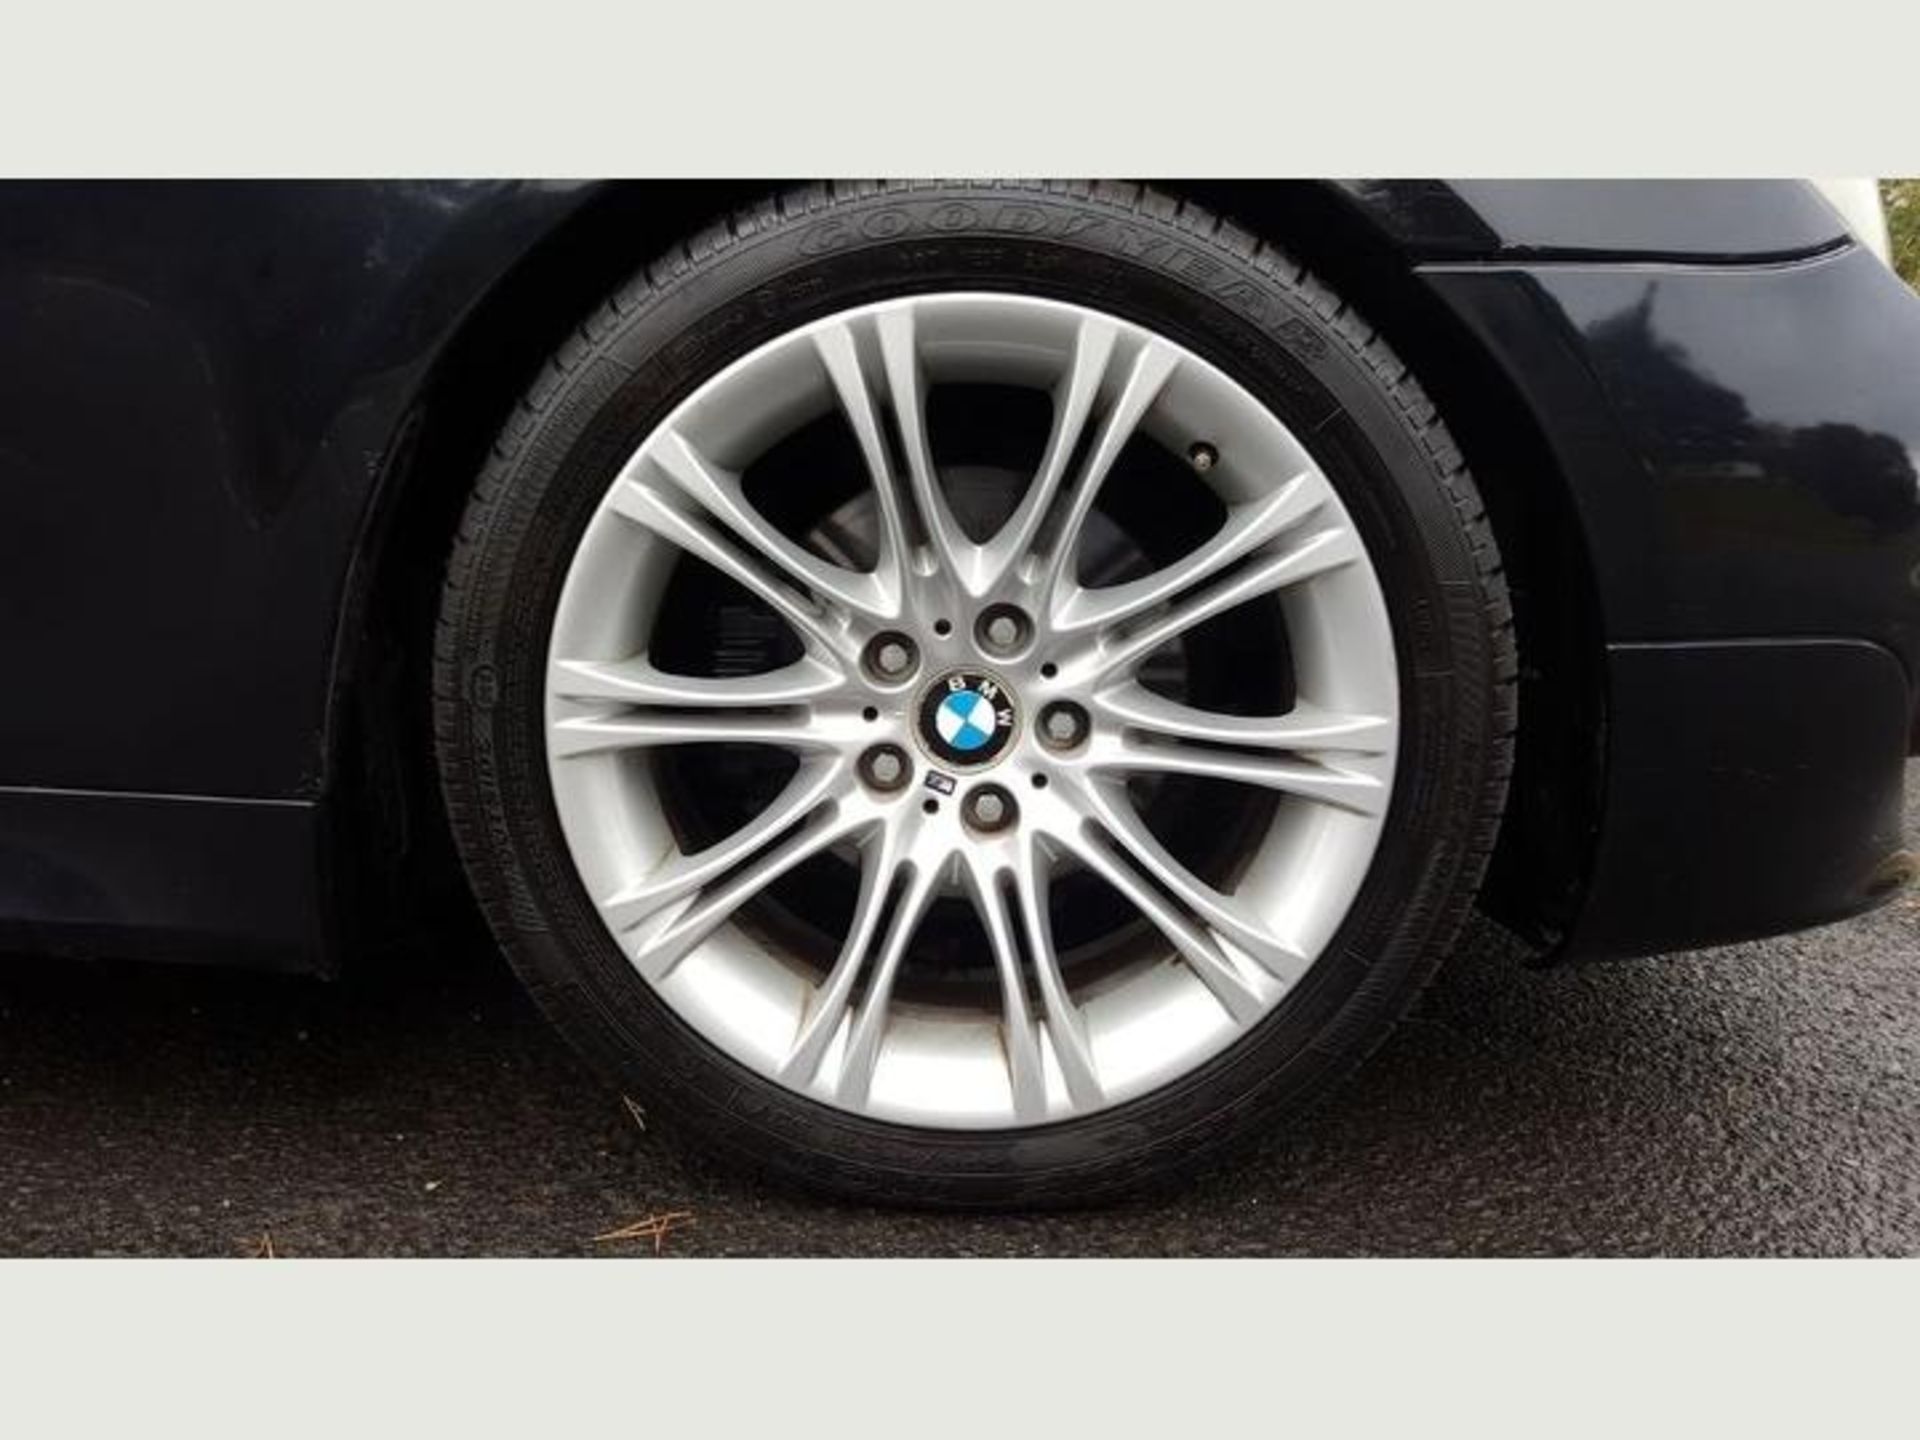 BMW, 5 SERIES 525D SPORT, ULZ 9248, 2-5 LTR, DIESEL, AUTOMATIC, 4 DOOR SALOON, 18.03.2005, CURRENT - Image 23 of 24